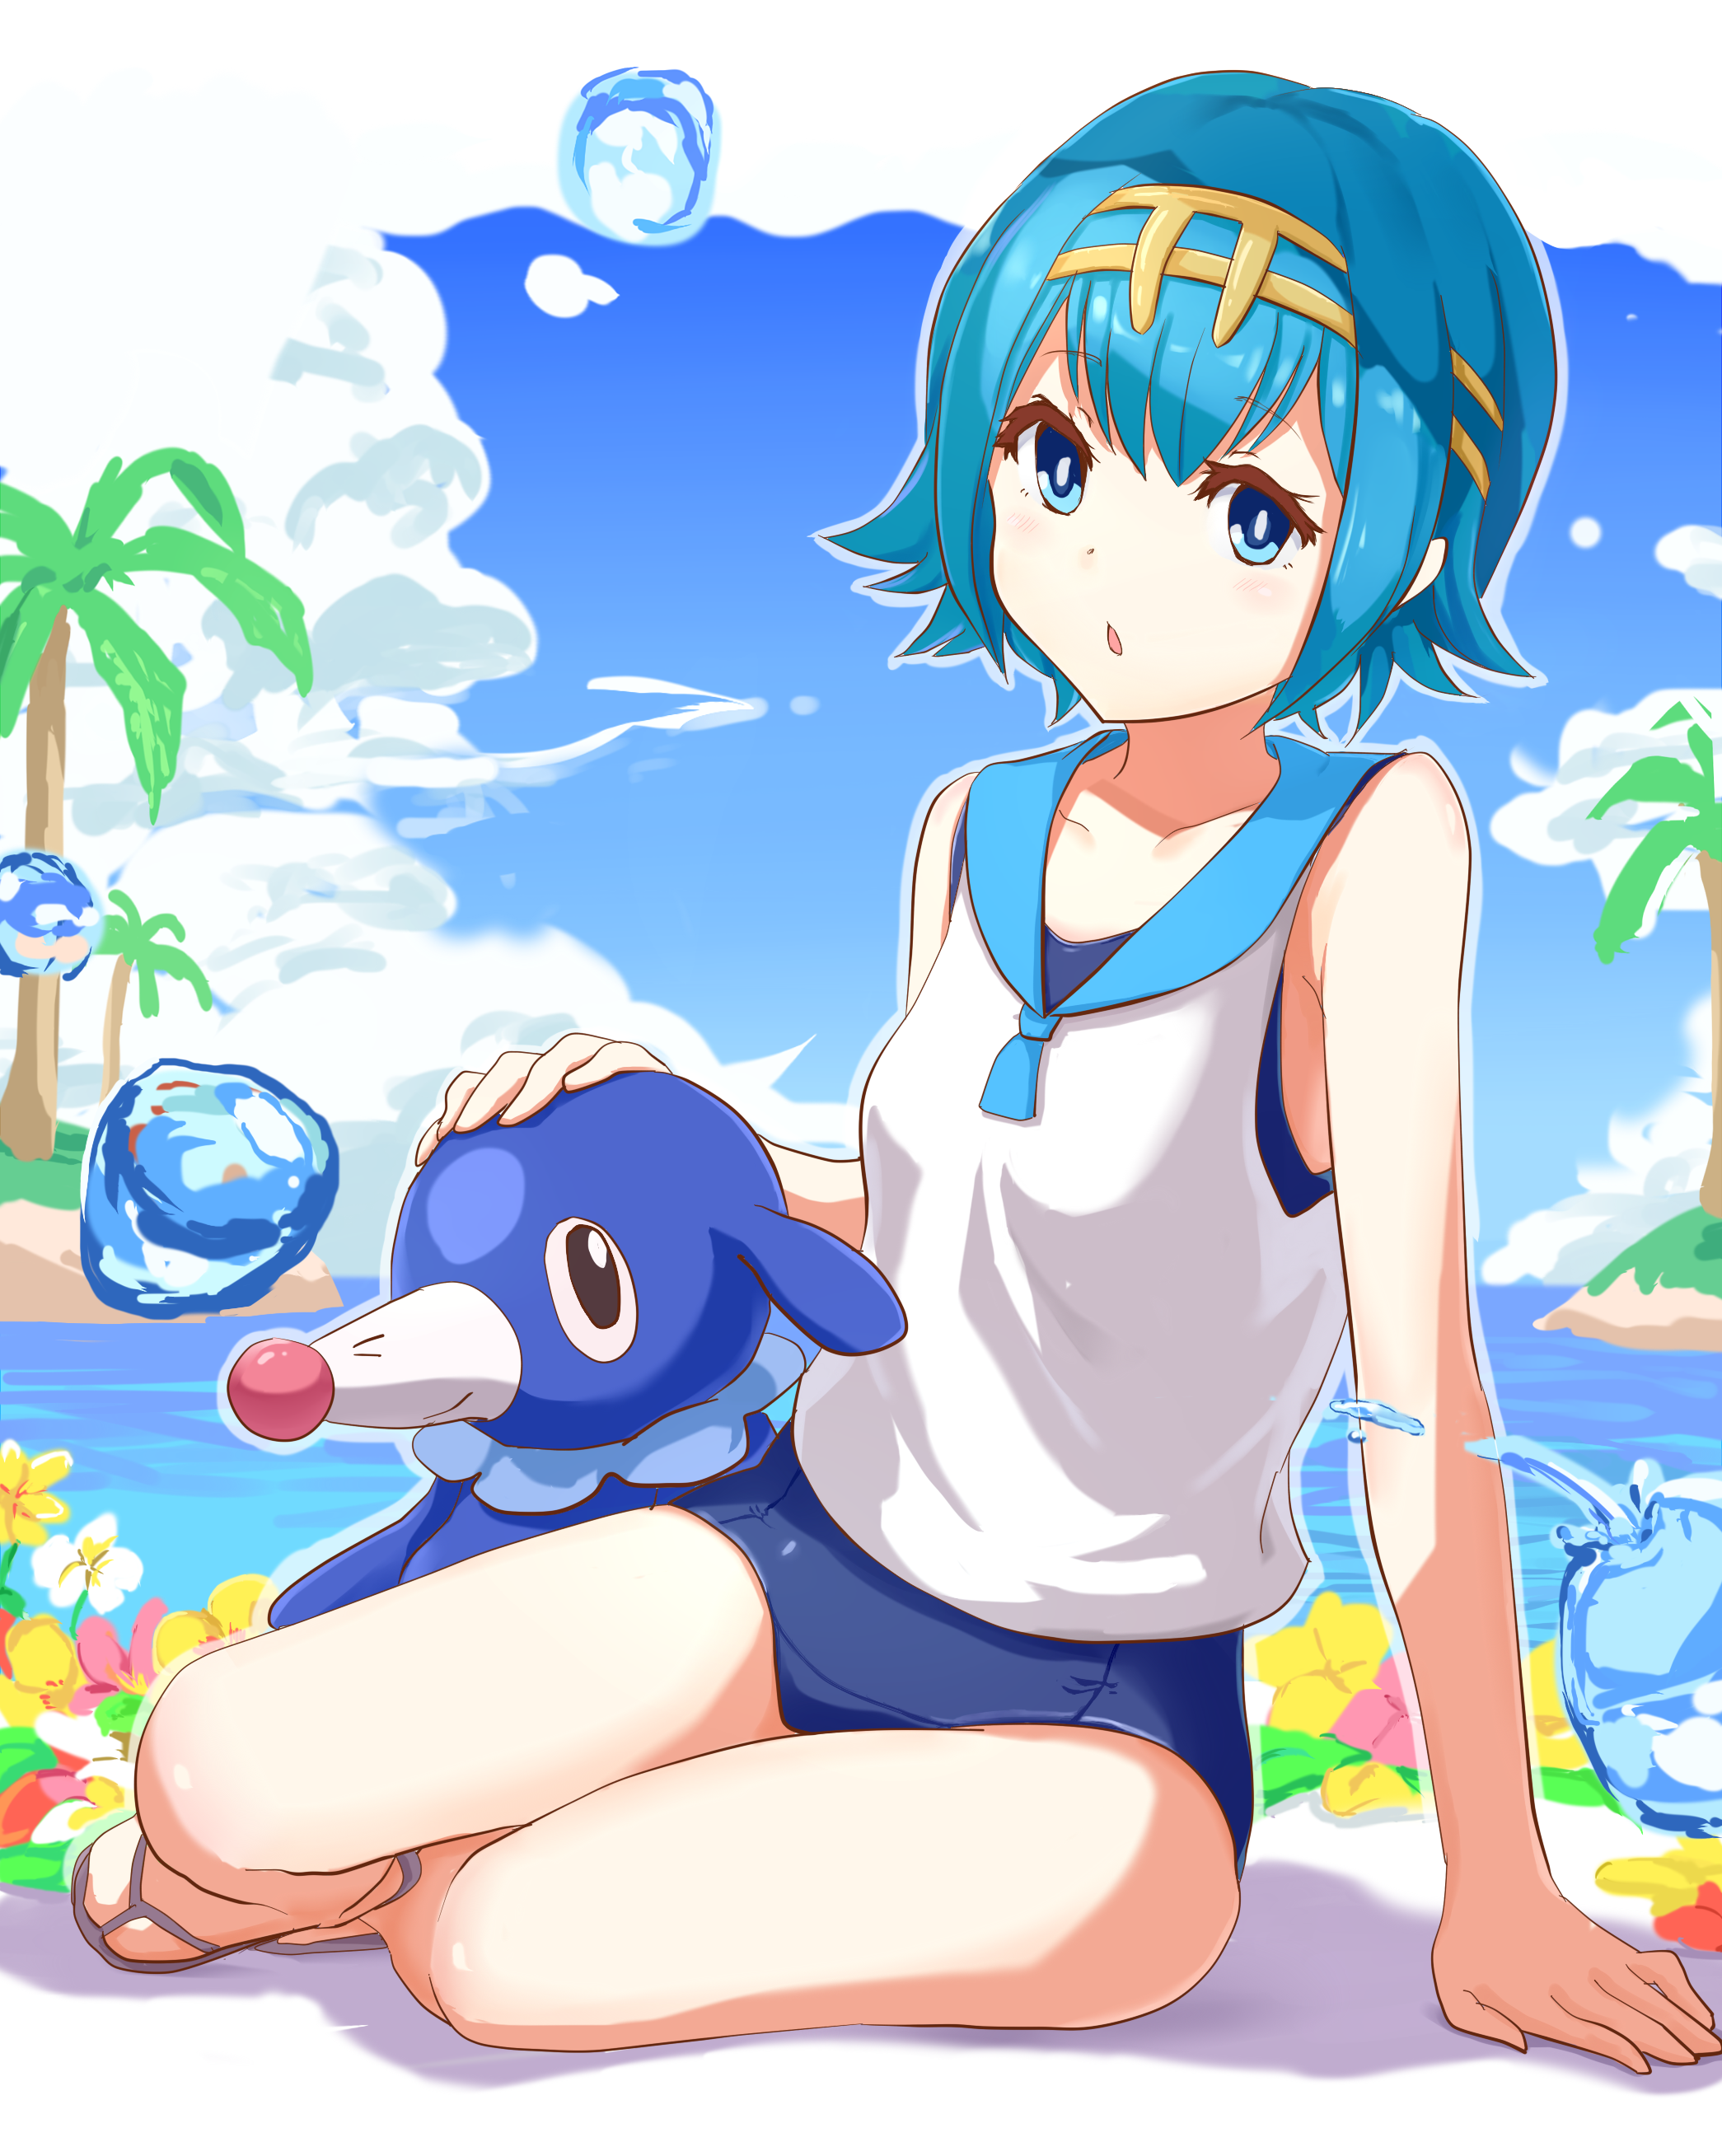 Lana and popplio pokemon and more drawn by maeshimashi